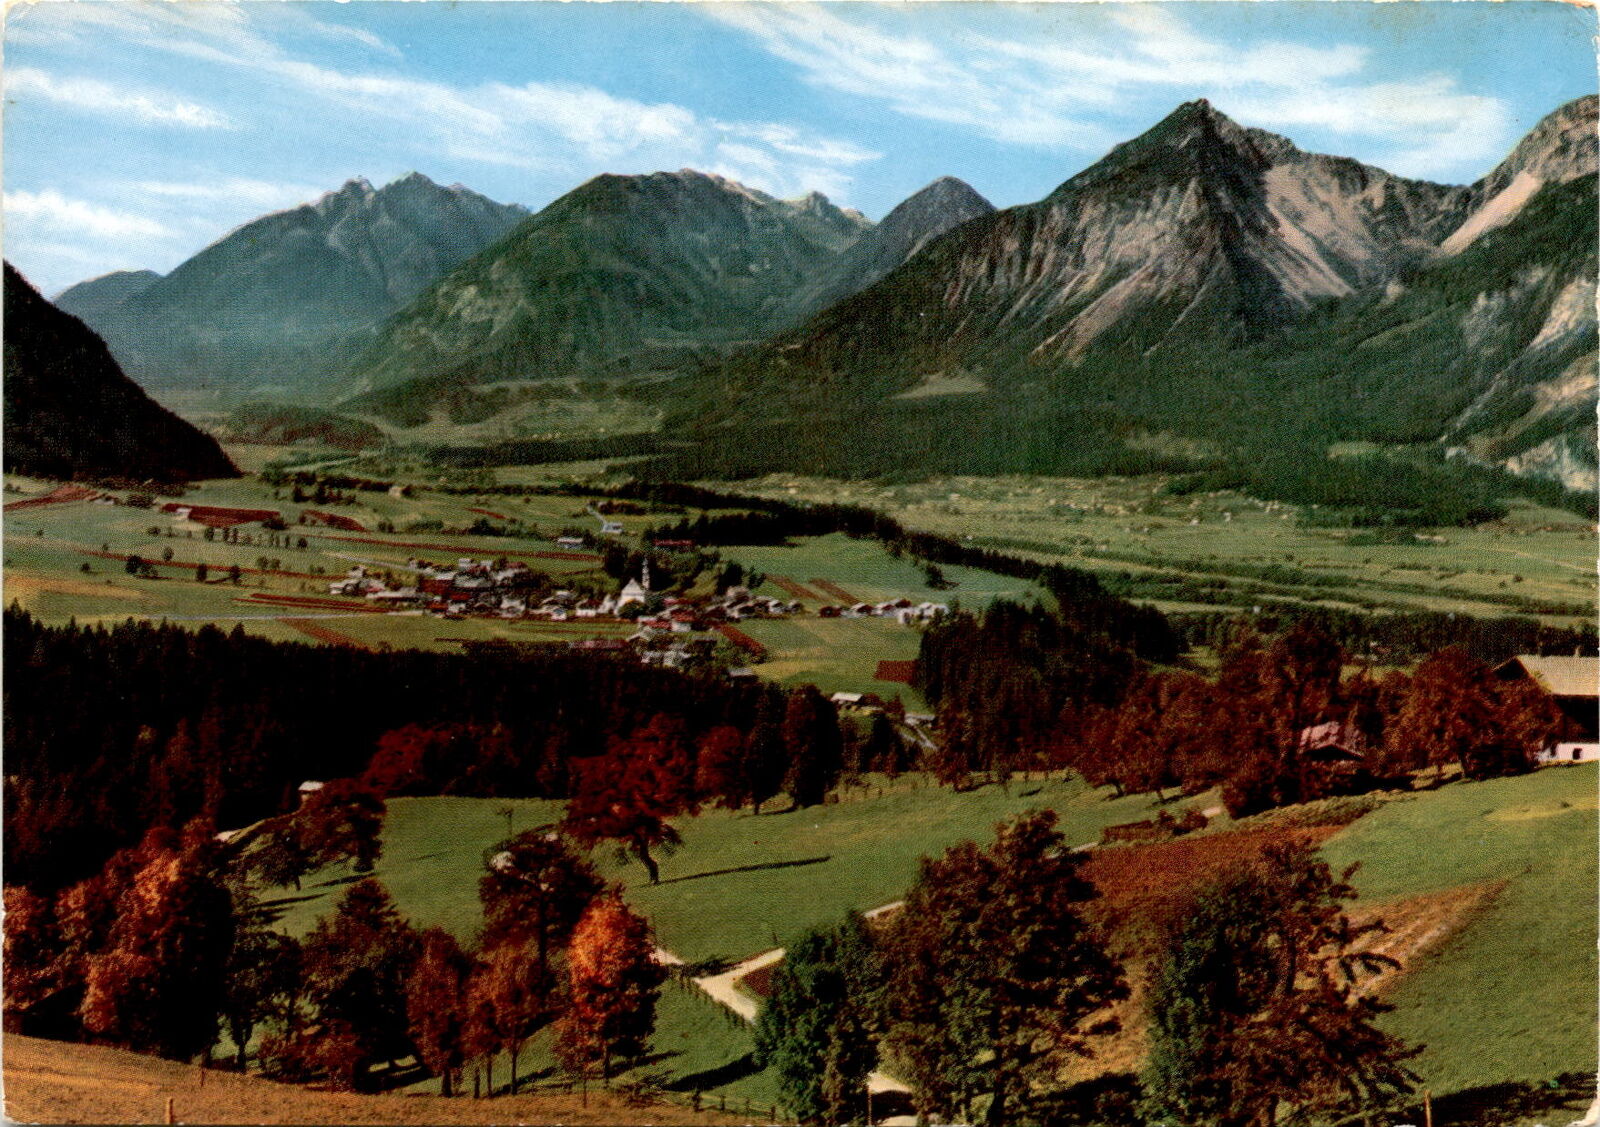 Reith bei Brixlegg, Tirol, Rofan Mountains, Schwaz region, Peter Rheinf Postcard